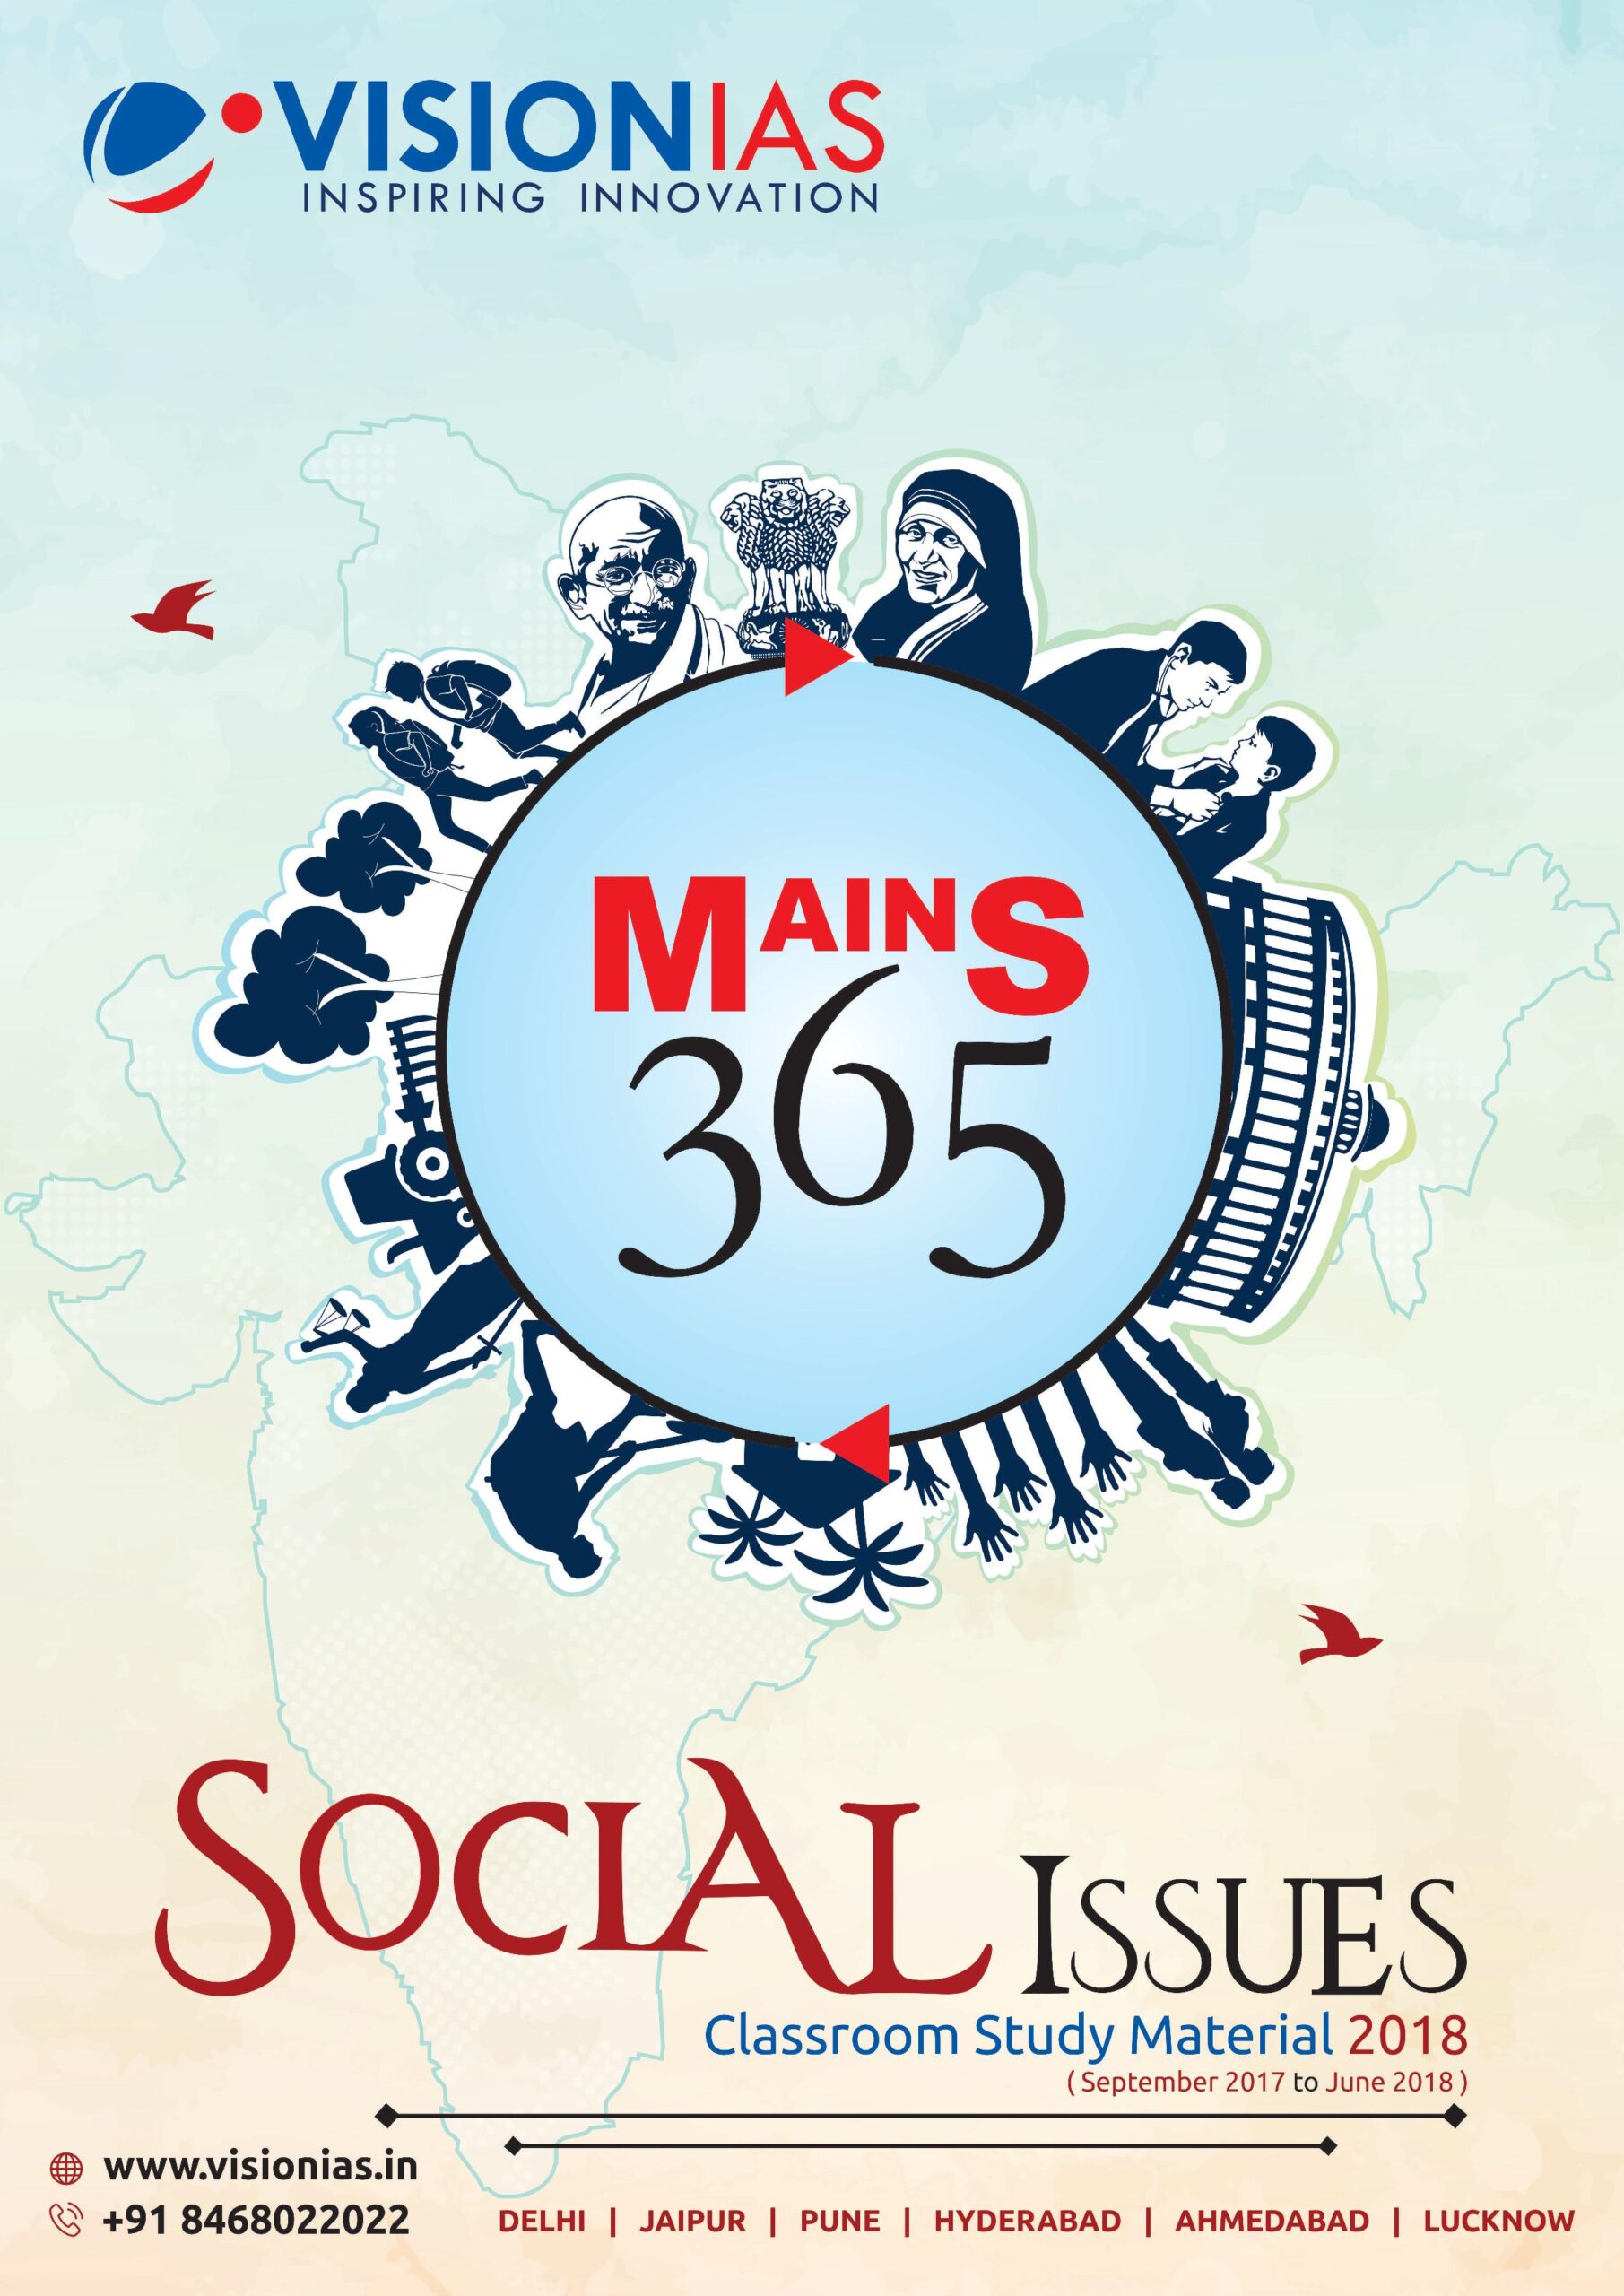 Vision IAS mains 365 Social Issue 2018